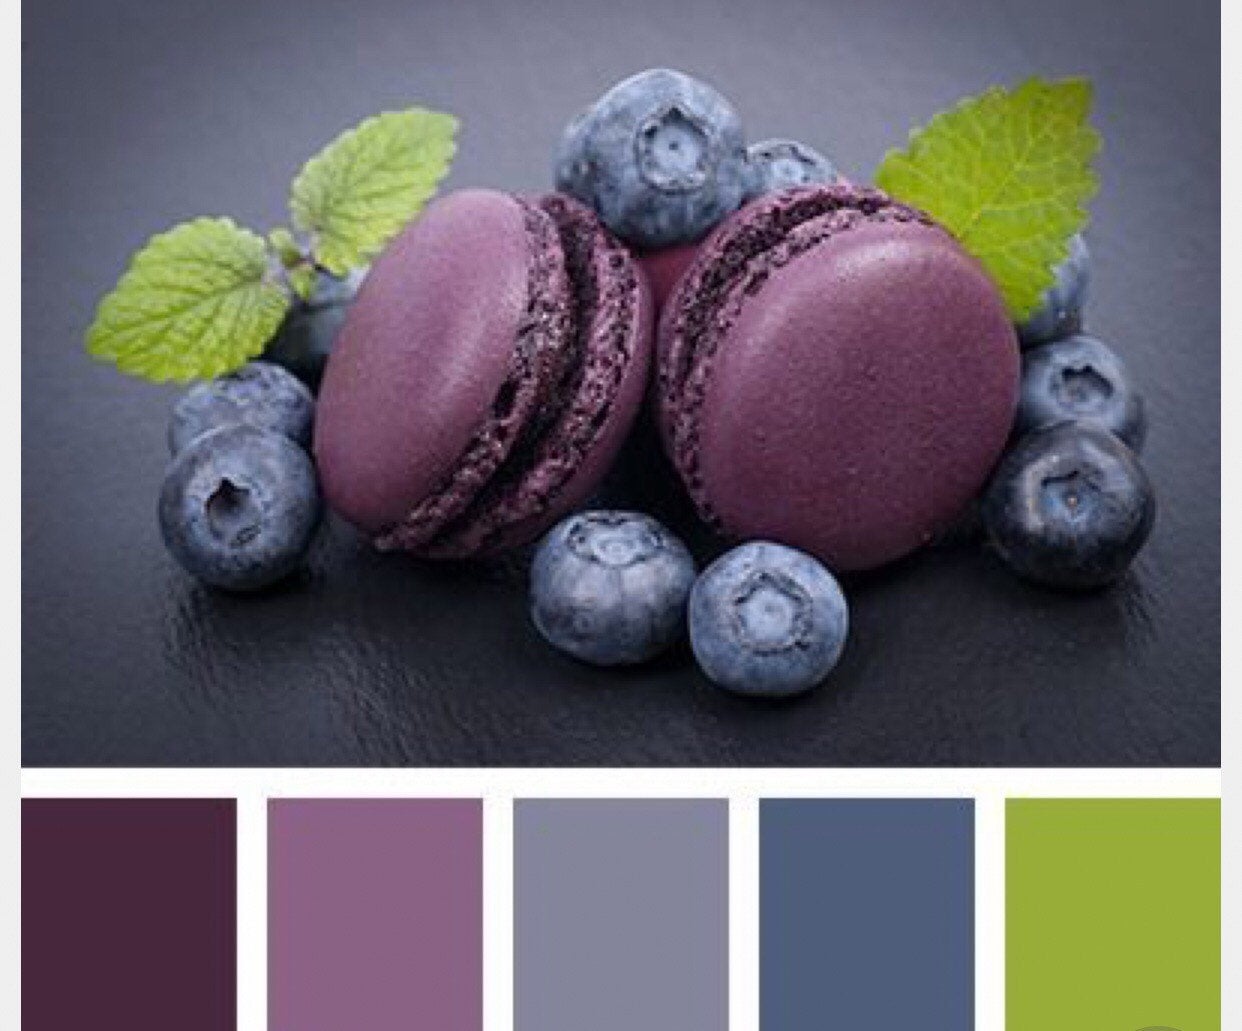 50 Bulk Silicone Beads - Blackberry Macaroon - Violet, Nectar, Bluebird, Wedgewood, Moss